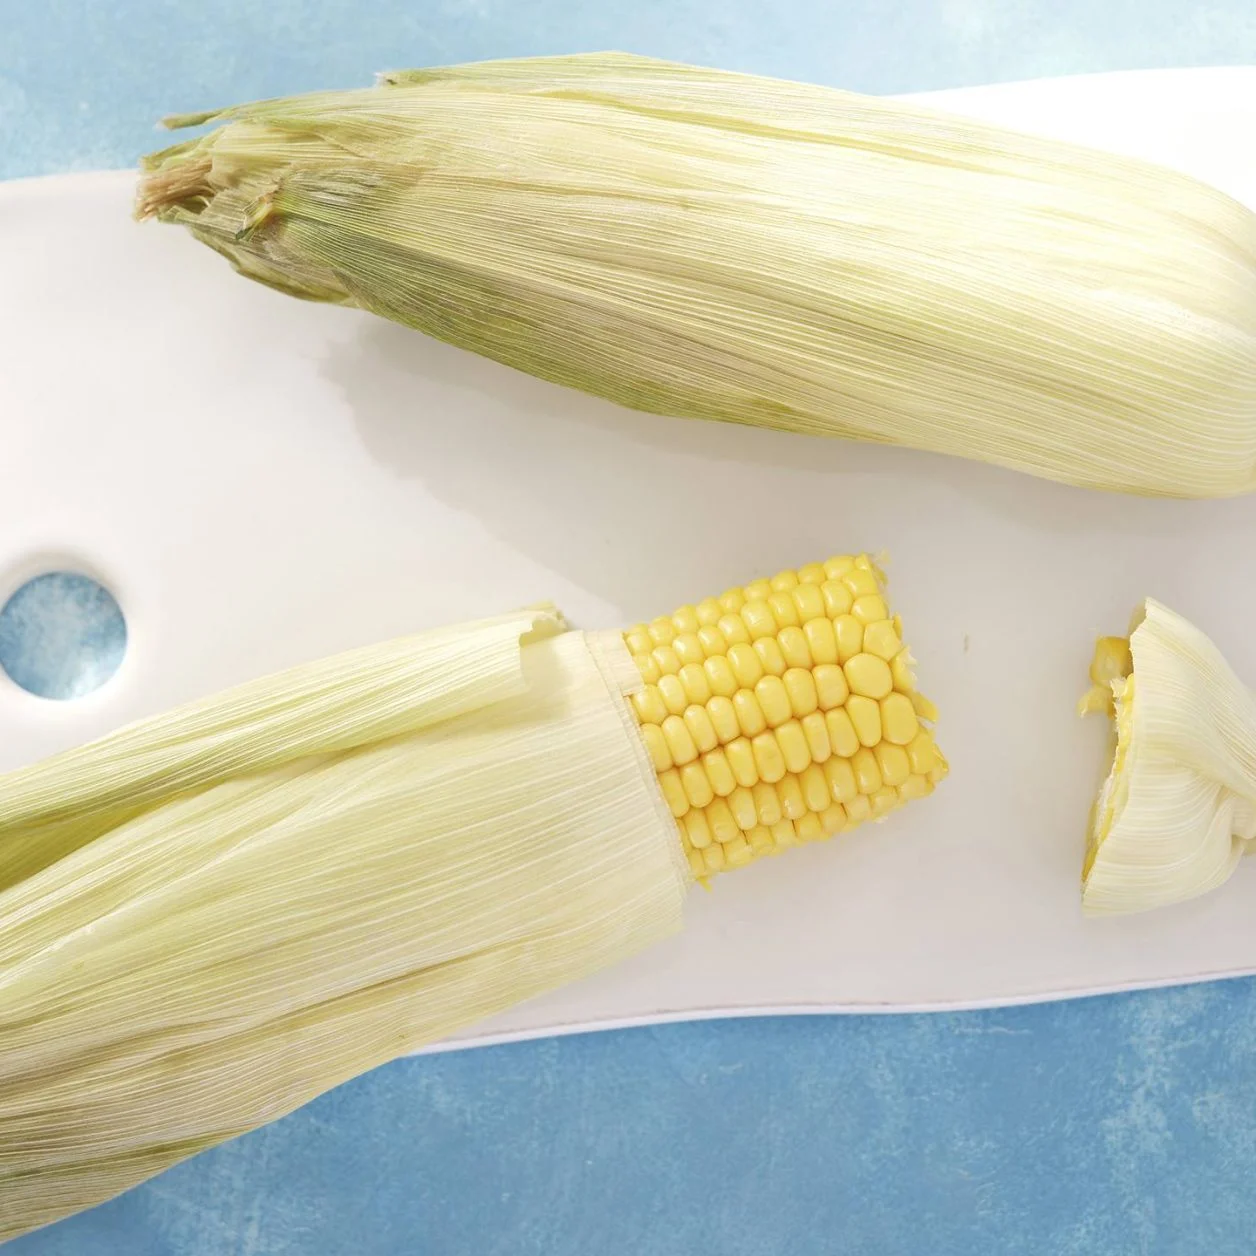 The Foolproof Way To Shuck Corn In Seconds 6 1256x1256 C Default 